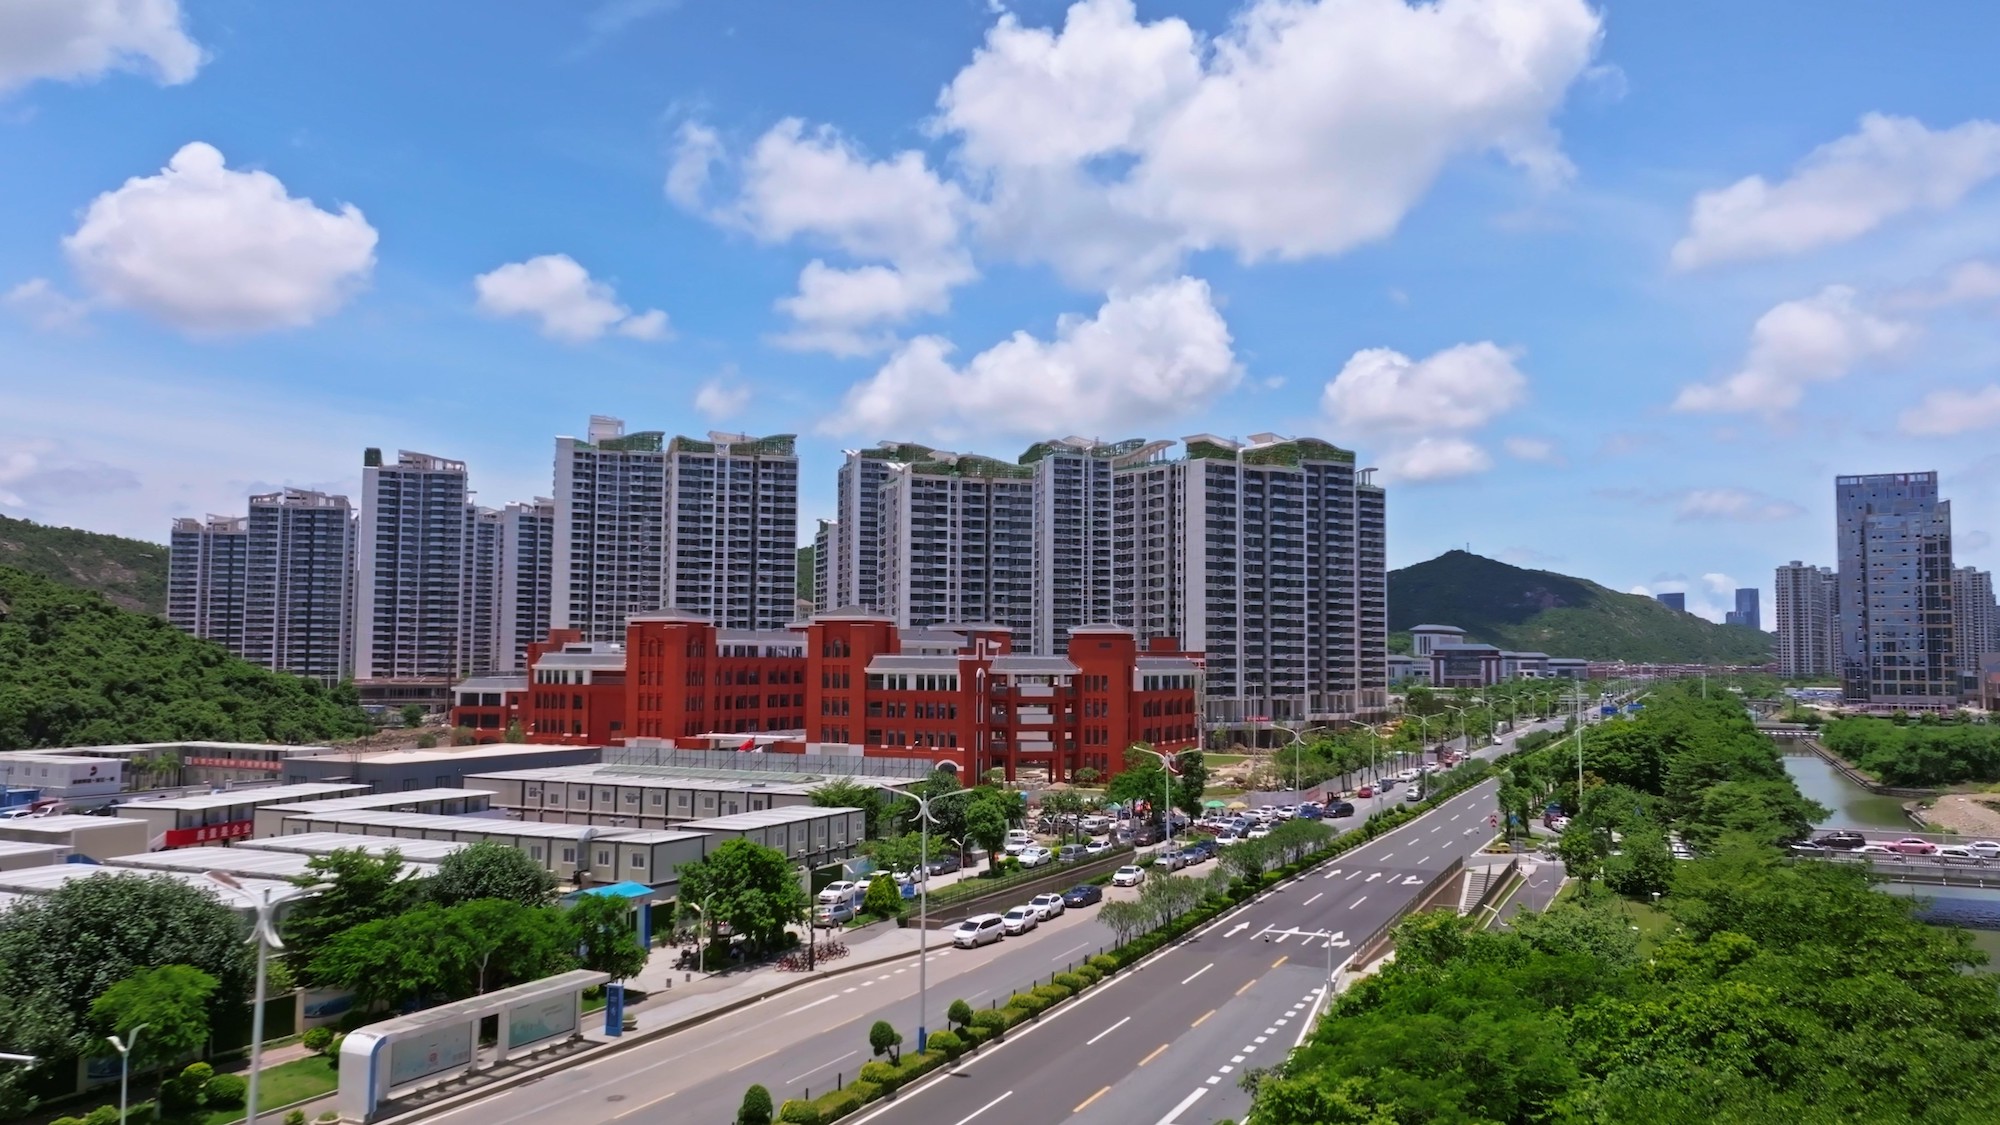 Macau New Neighbourhood flats go on sale from tomorrow